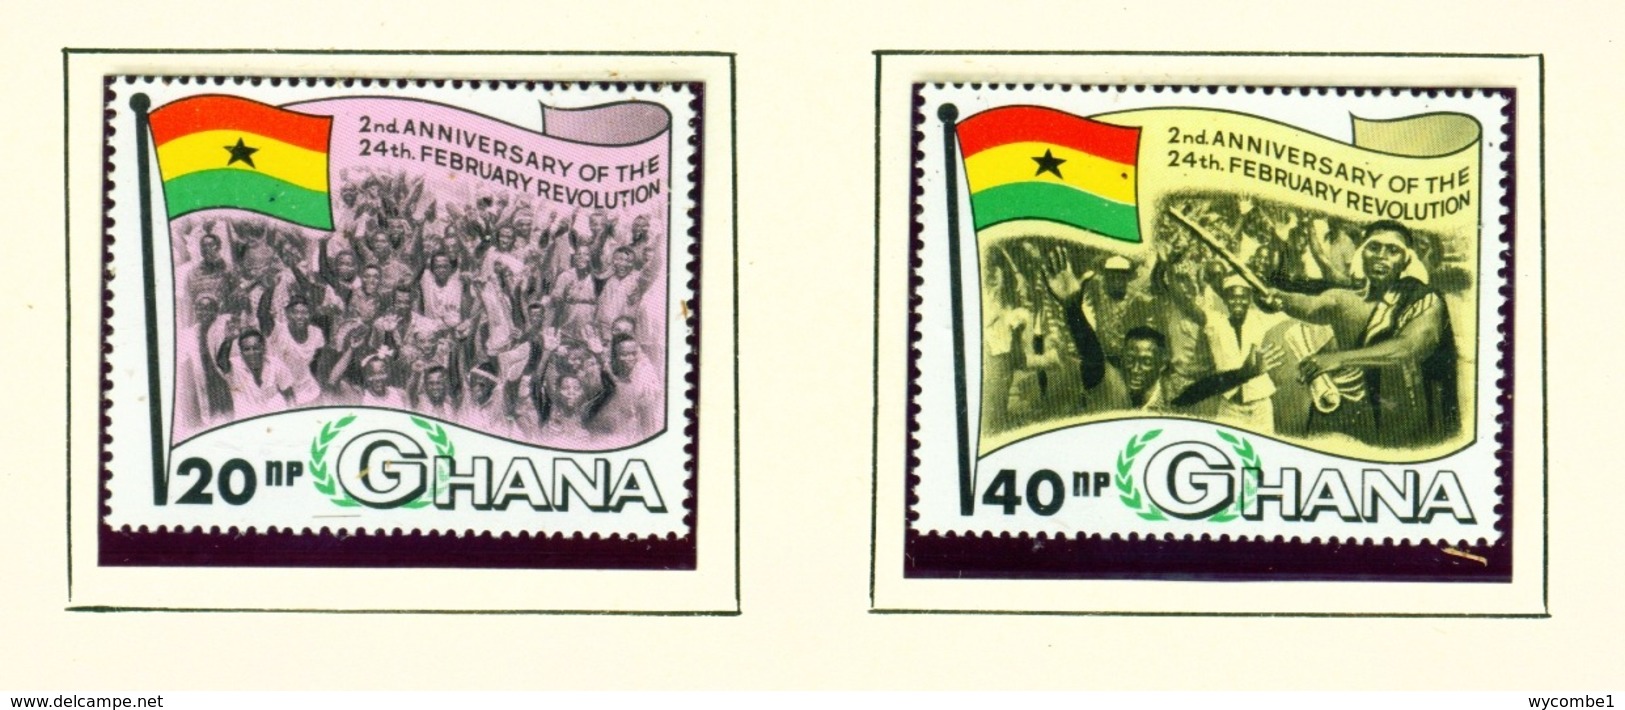 GHANA  -  1968 February Revolution Set Unmounted/Never Hinged Mint - Ghana (1957-...)